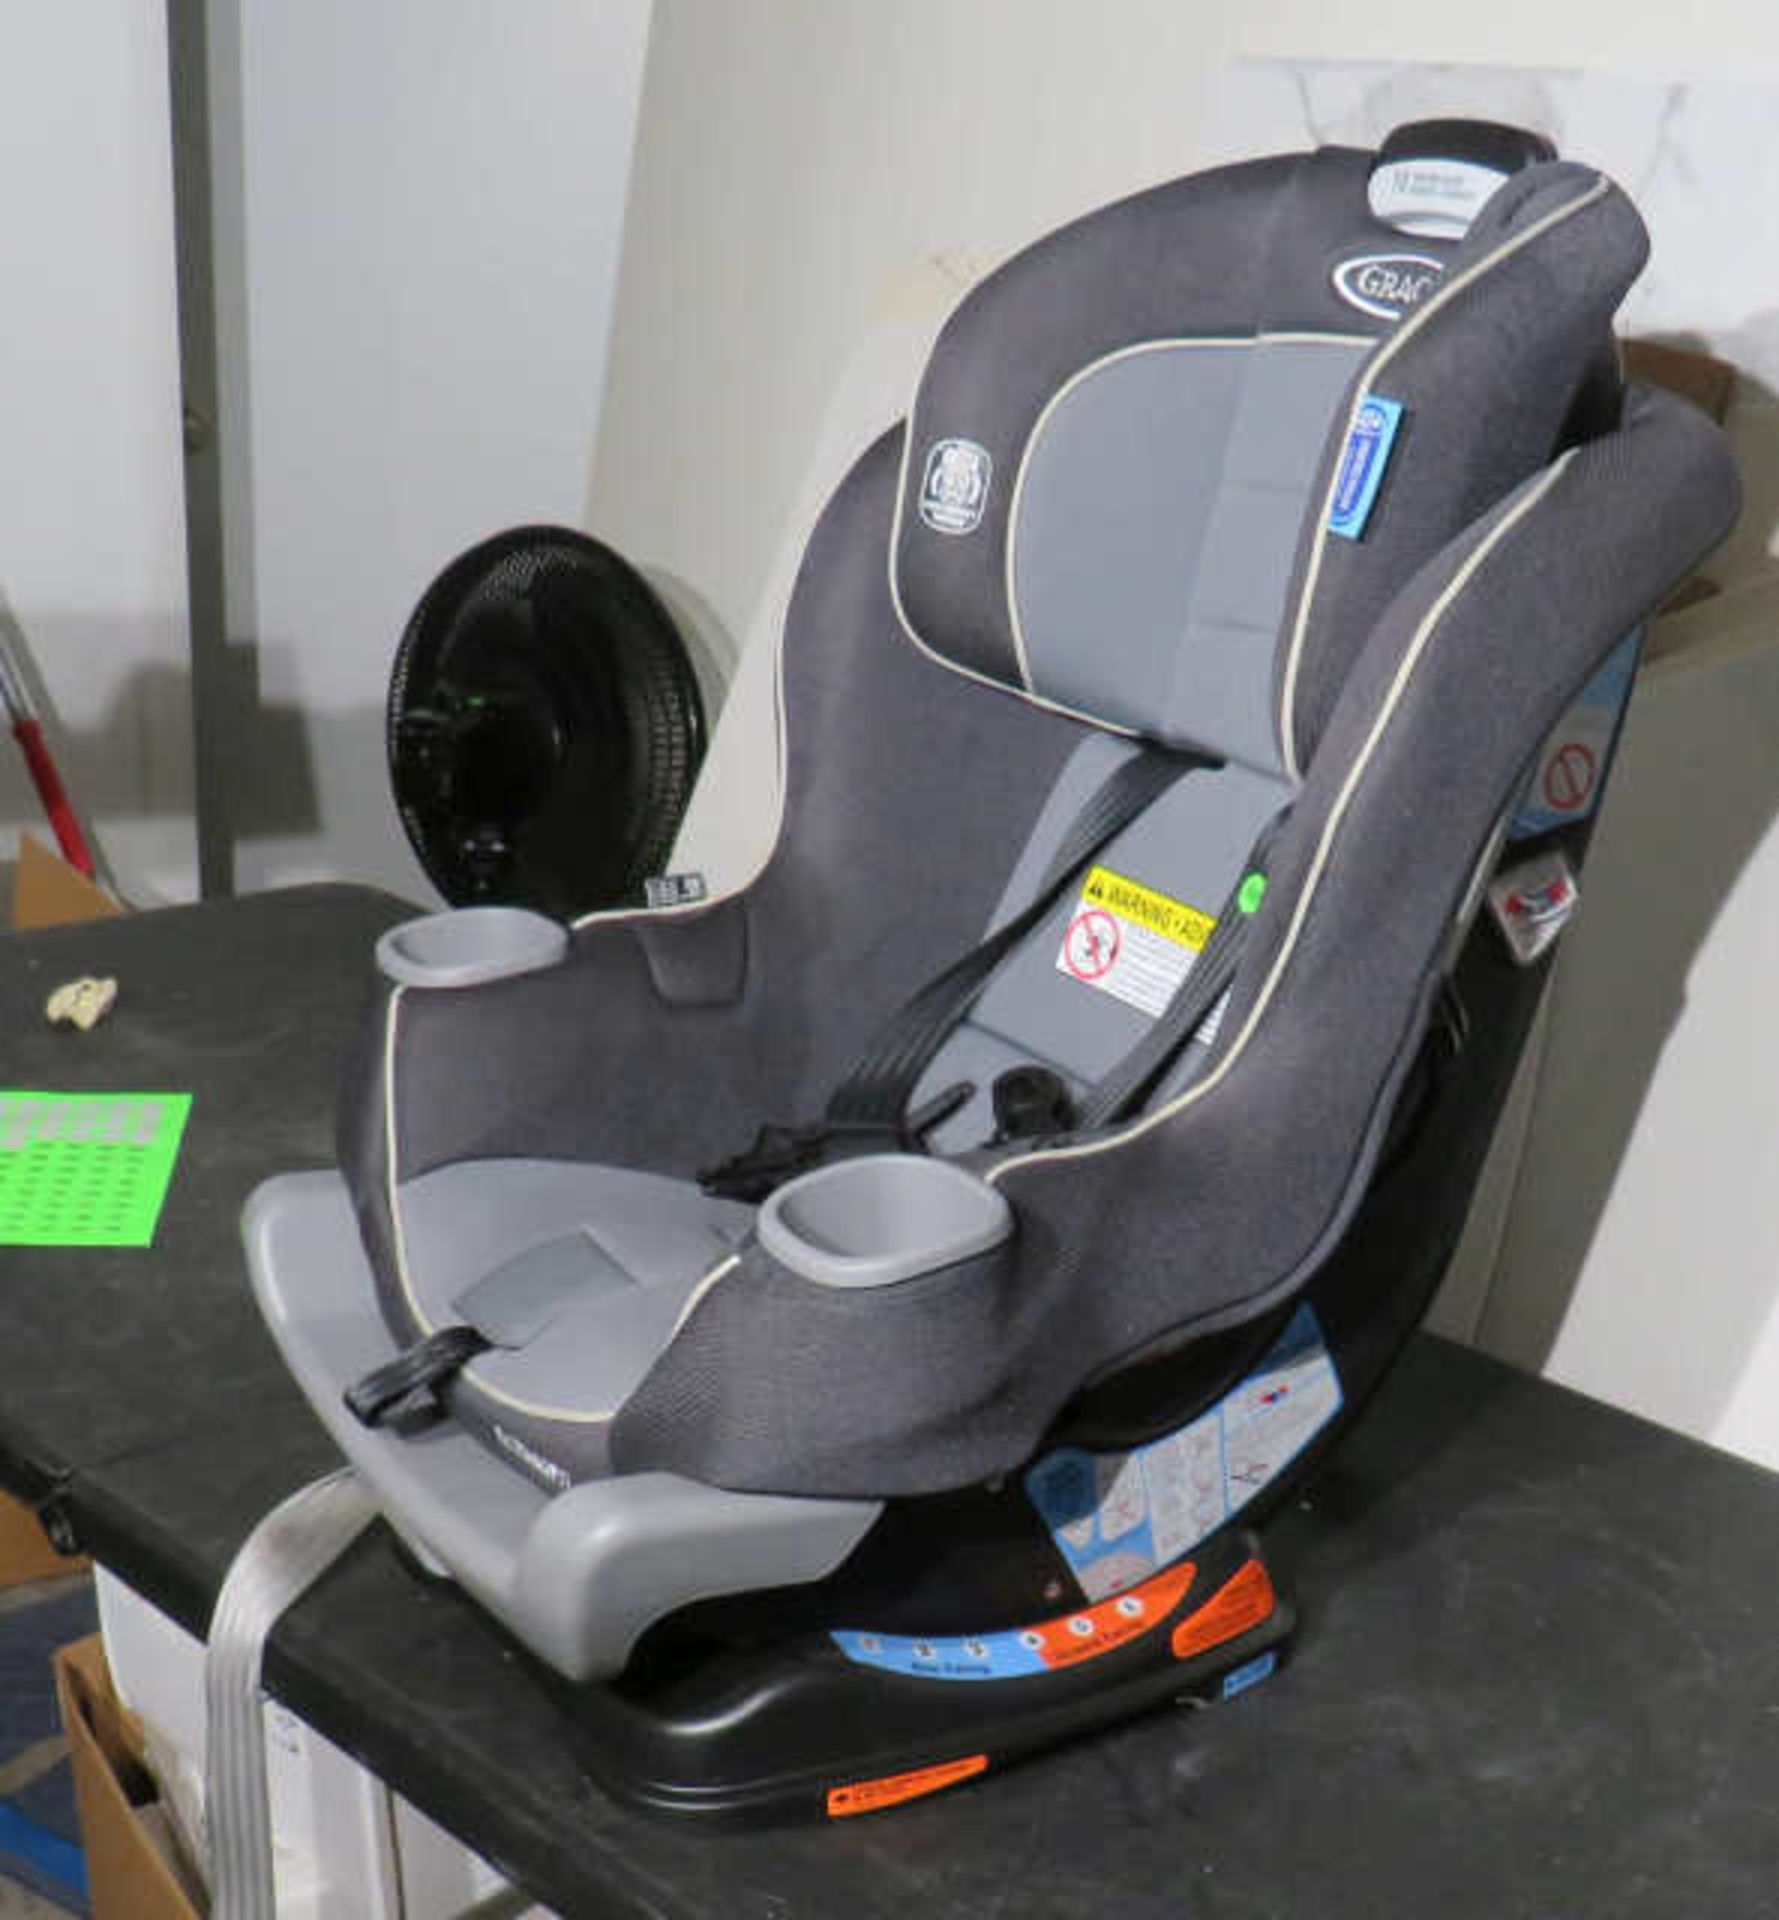 Grayco car seat - Image 2 of 2